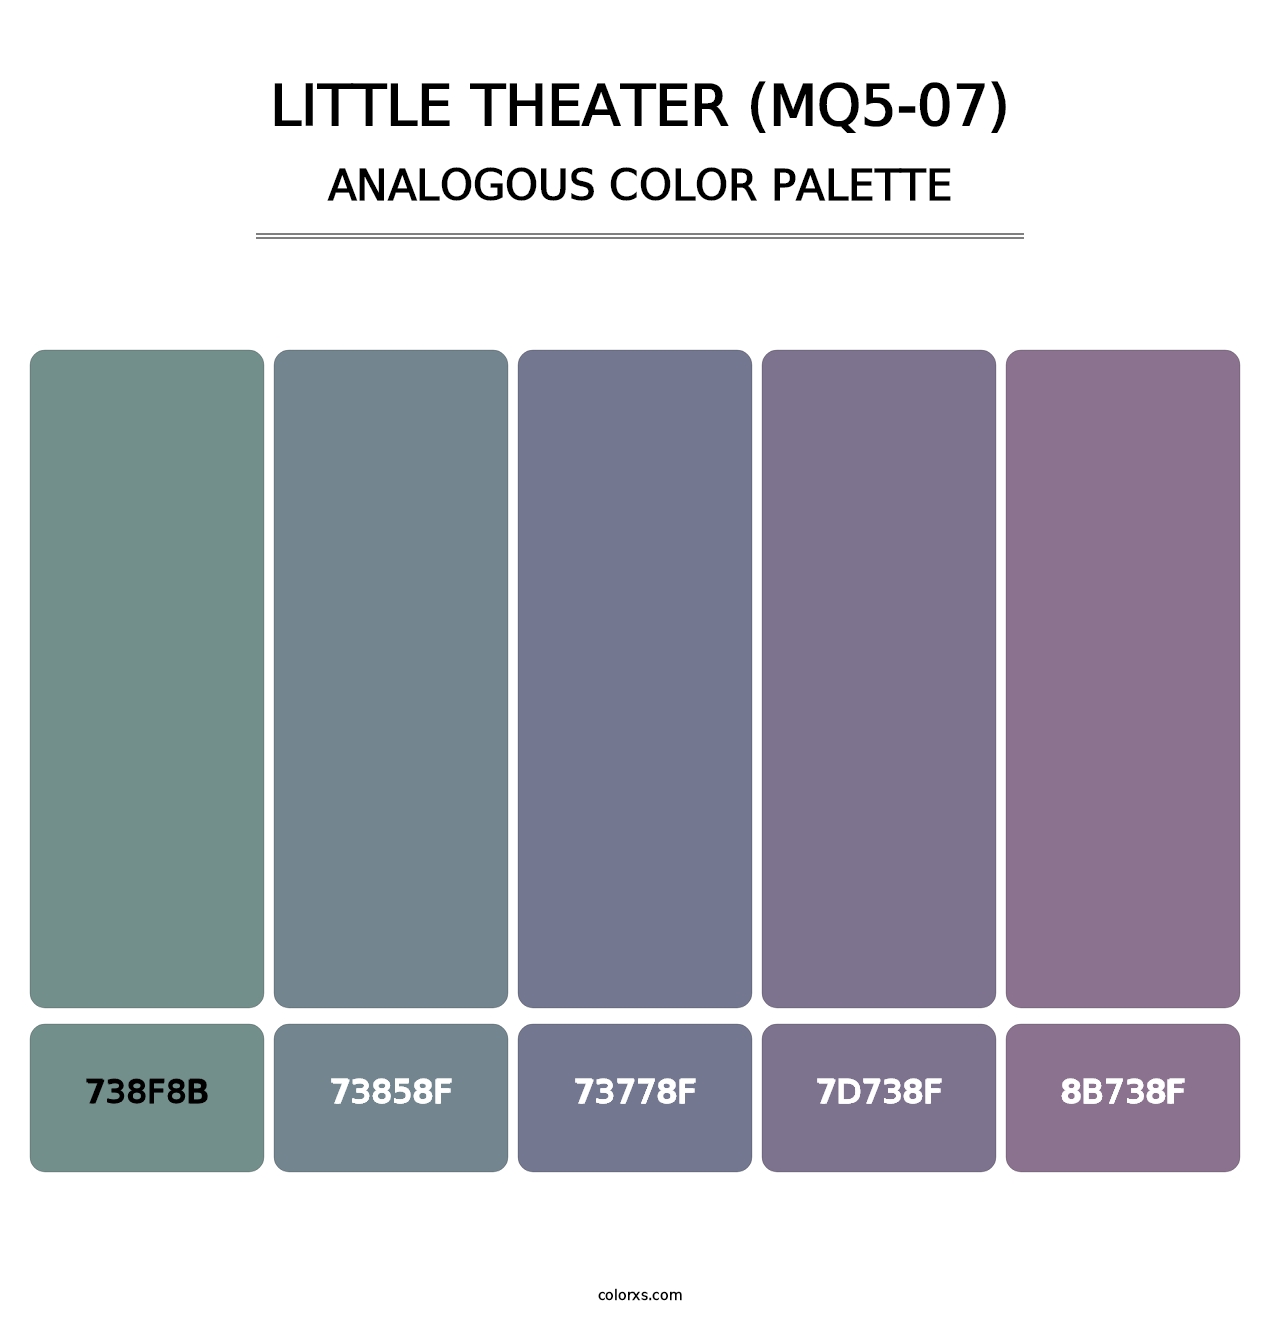 Little Theater (MQ5-07) - Analogous Color Palette